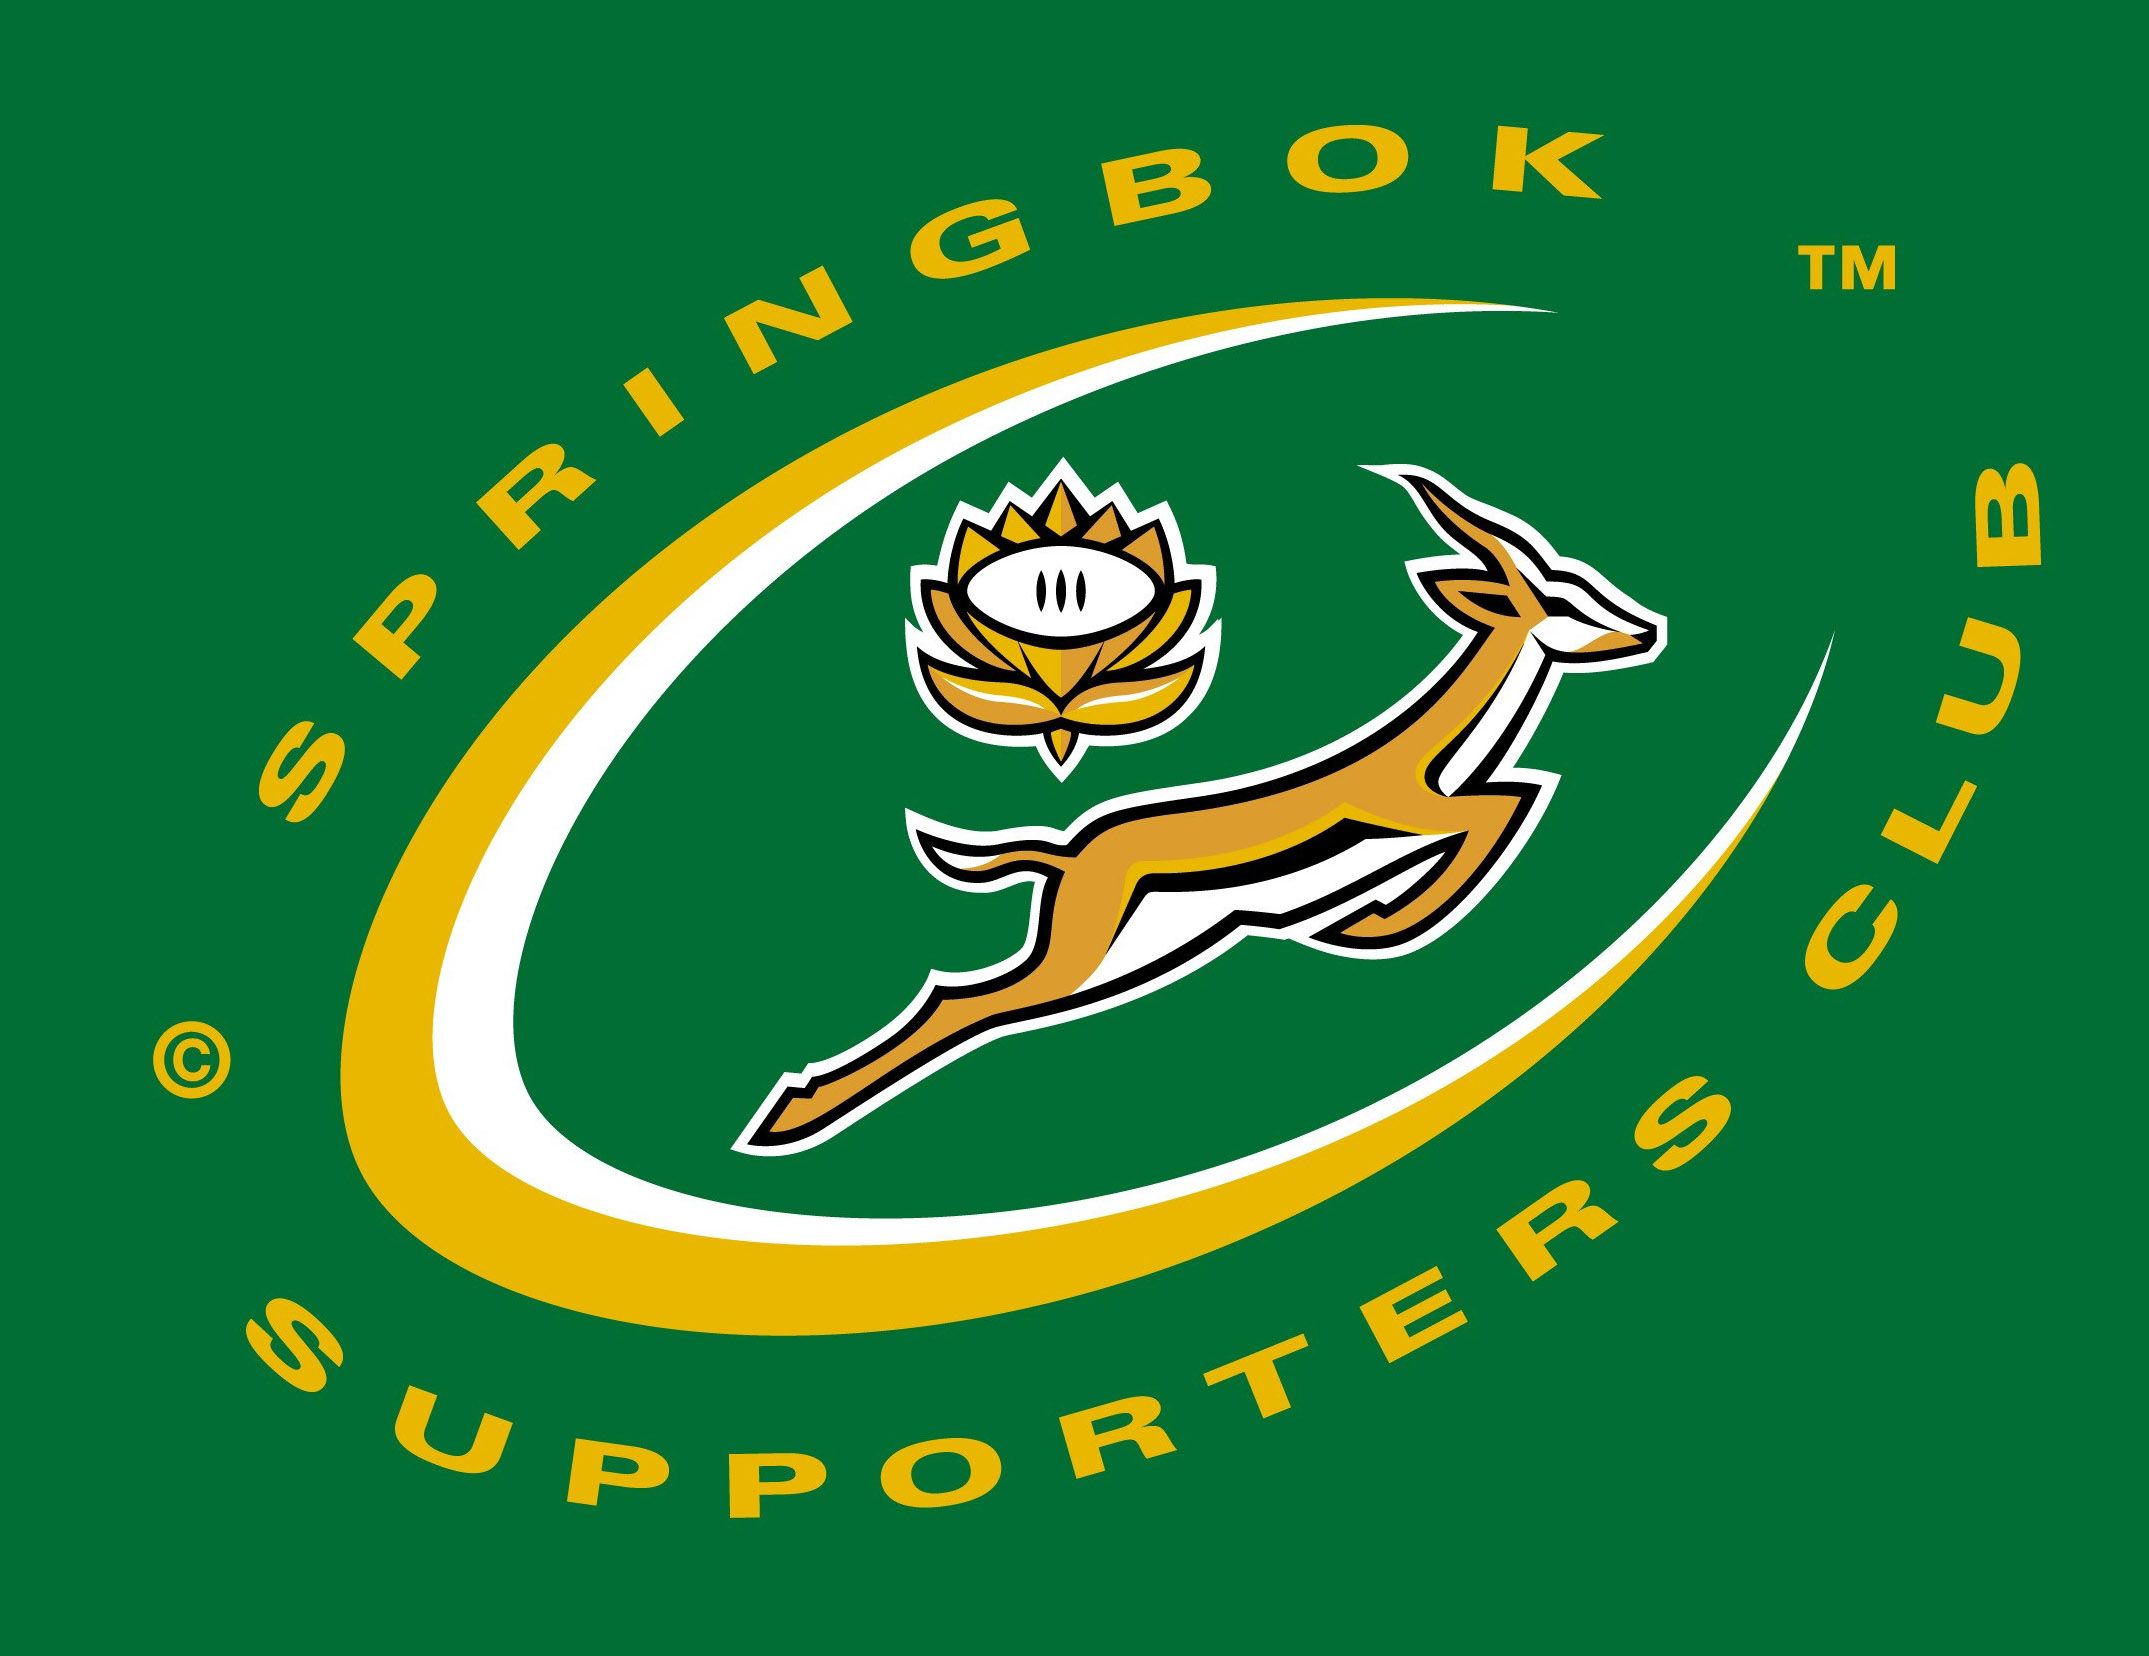 Springbok rugby, Rugby logo, Rugby union